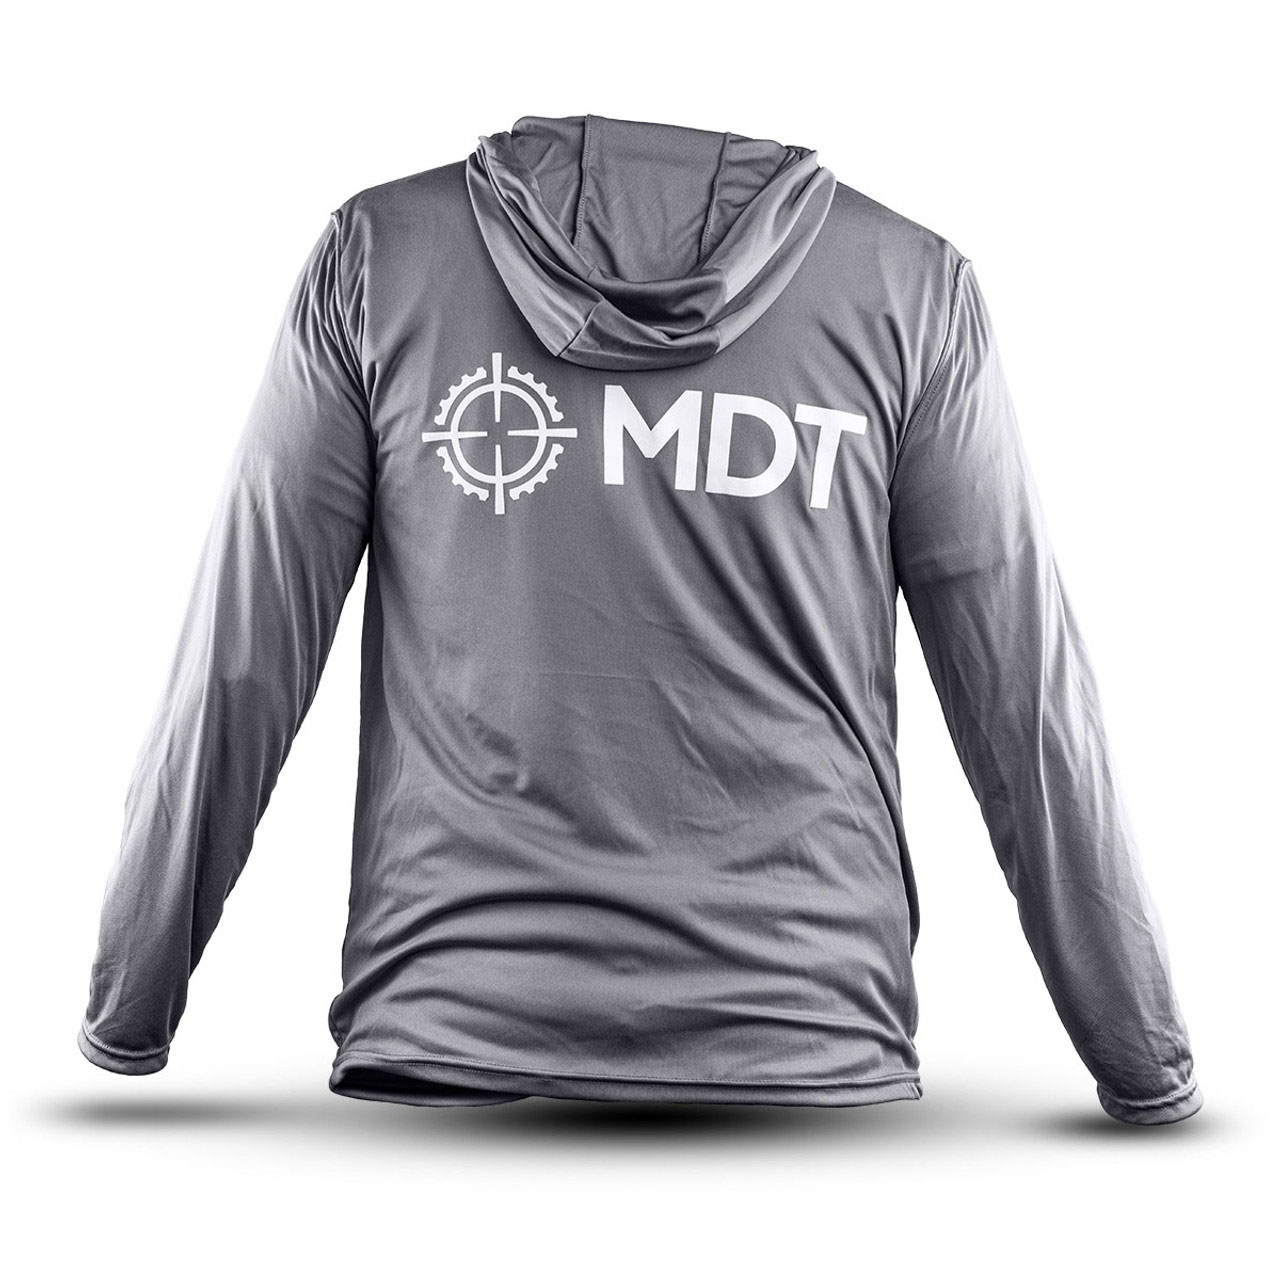 MDT Merchandise - MDT Sun Shirt Hoodies - Unisex - 2XL - GRY